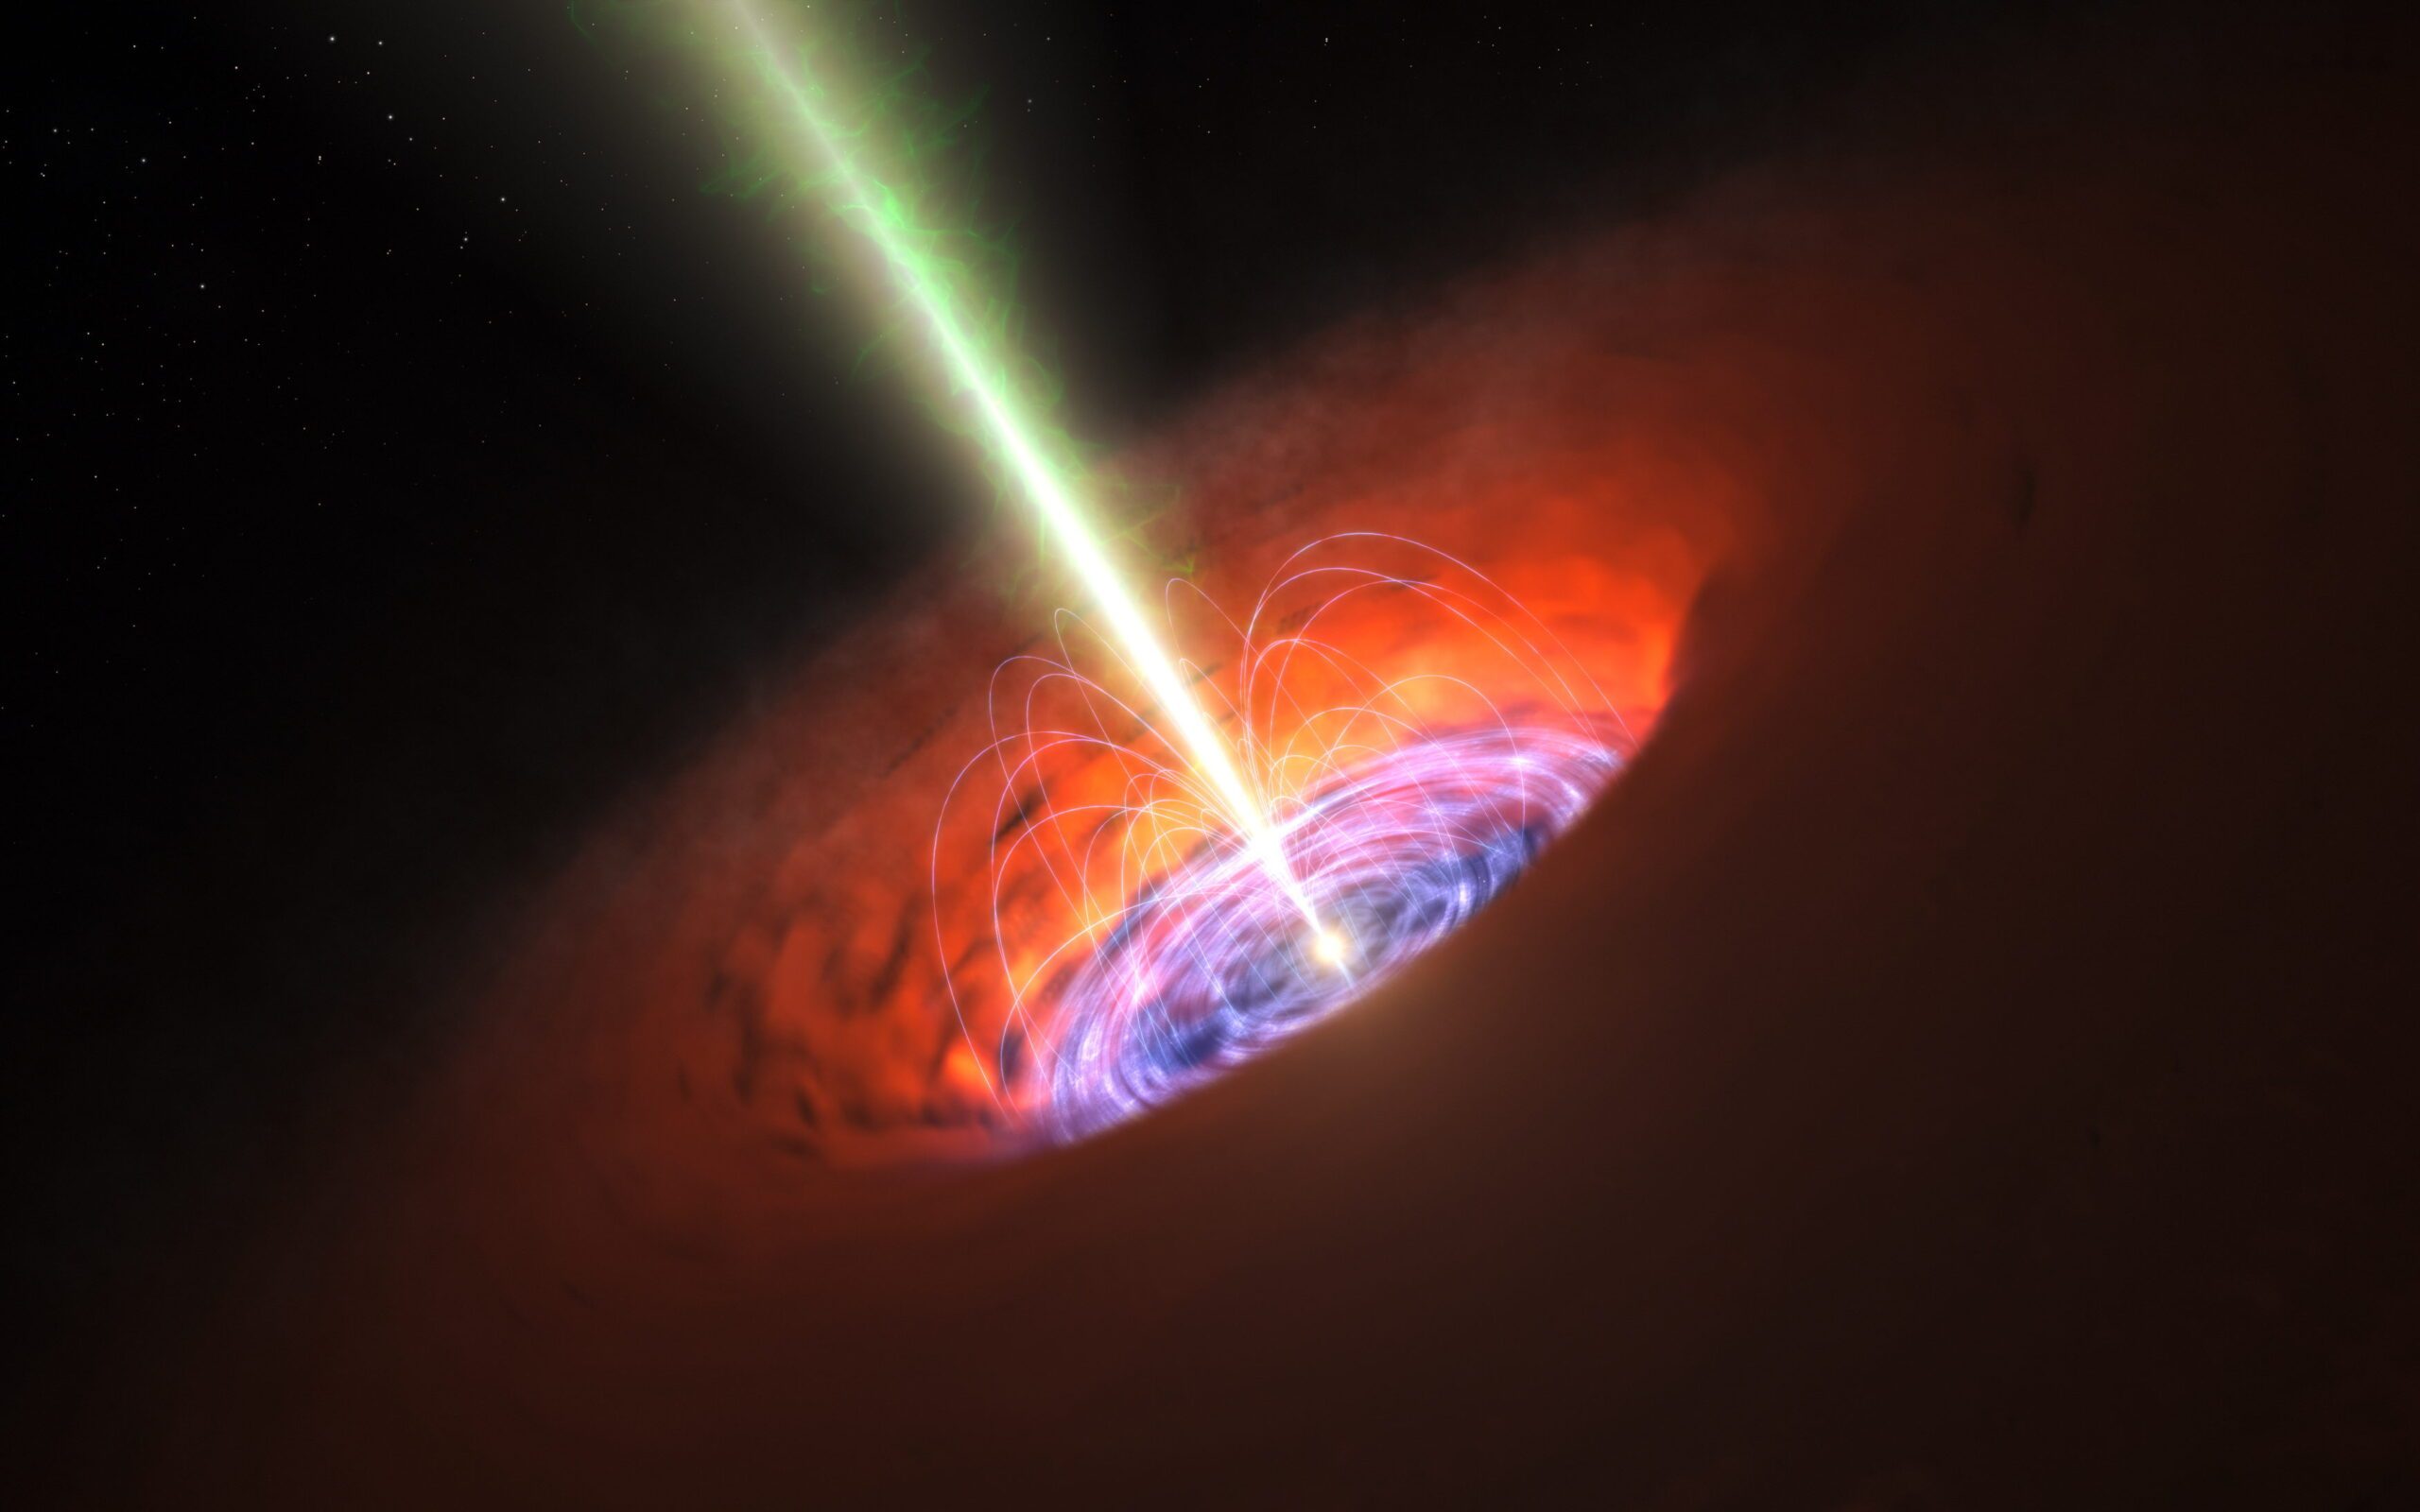 Desert telescope stakes out supermassive black hole